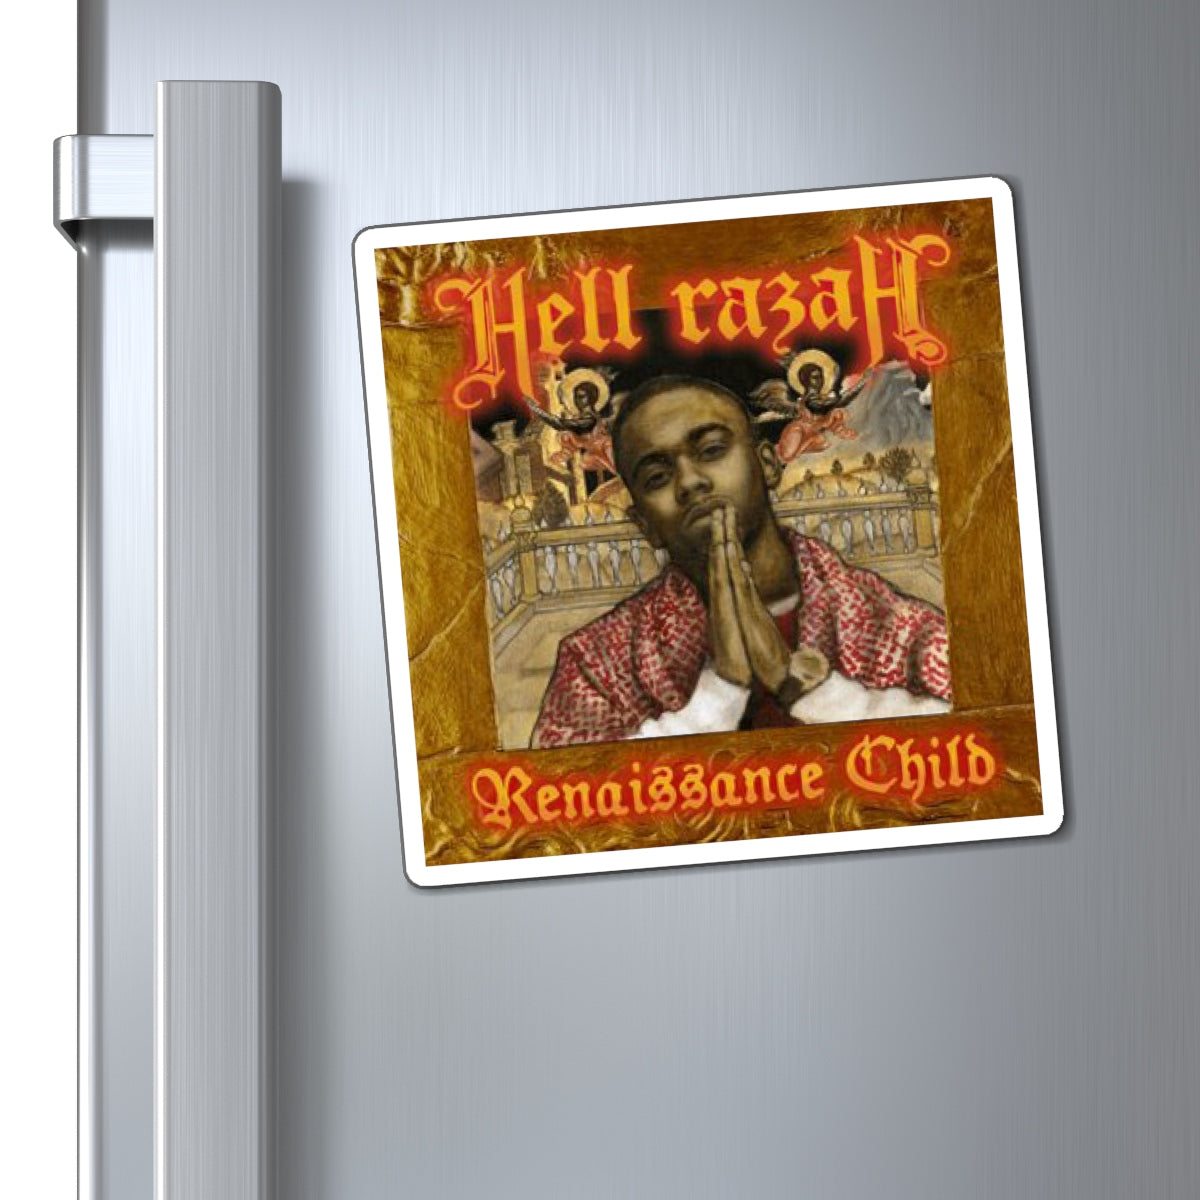 Renaissance Child Cover Art - HellRazah Music Inc. Collectible Magnet